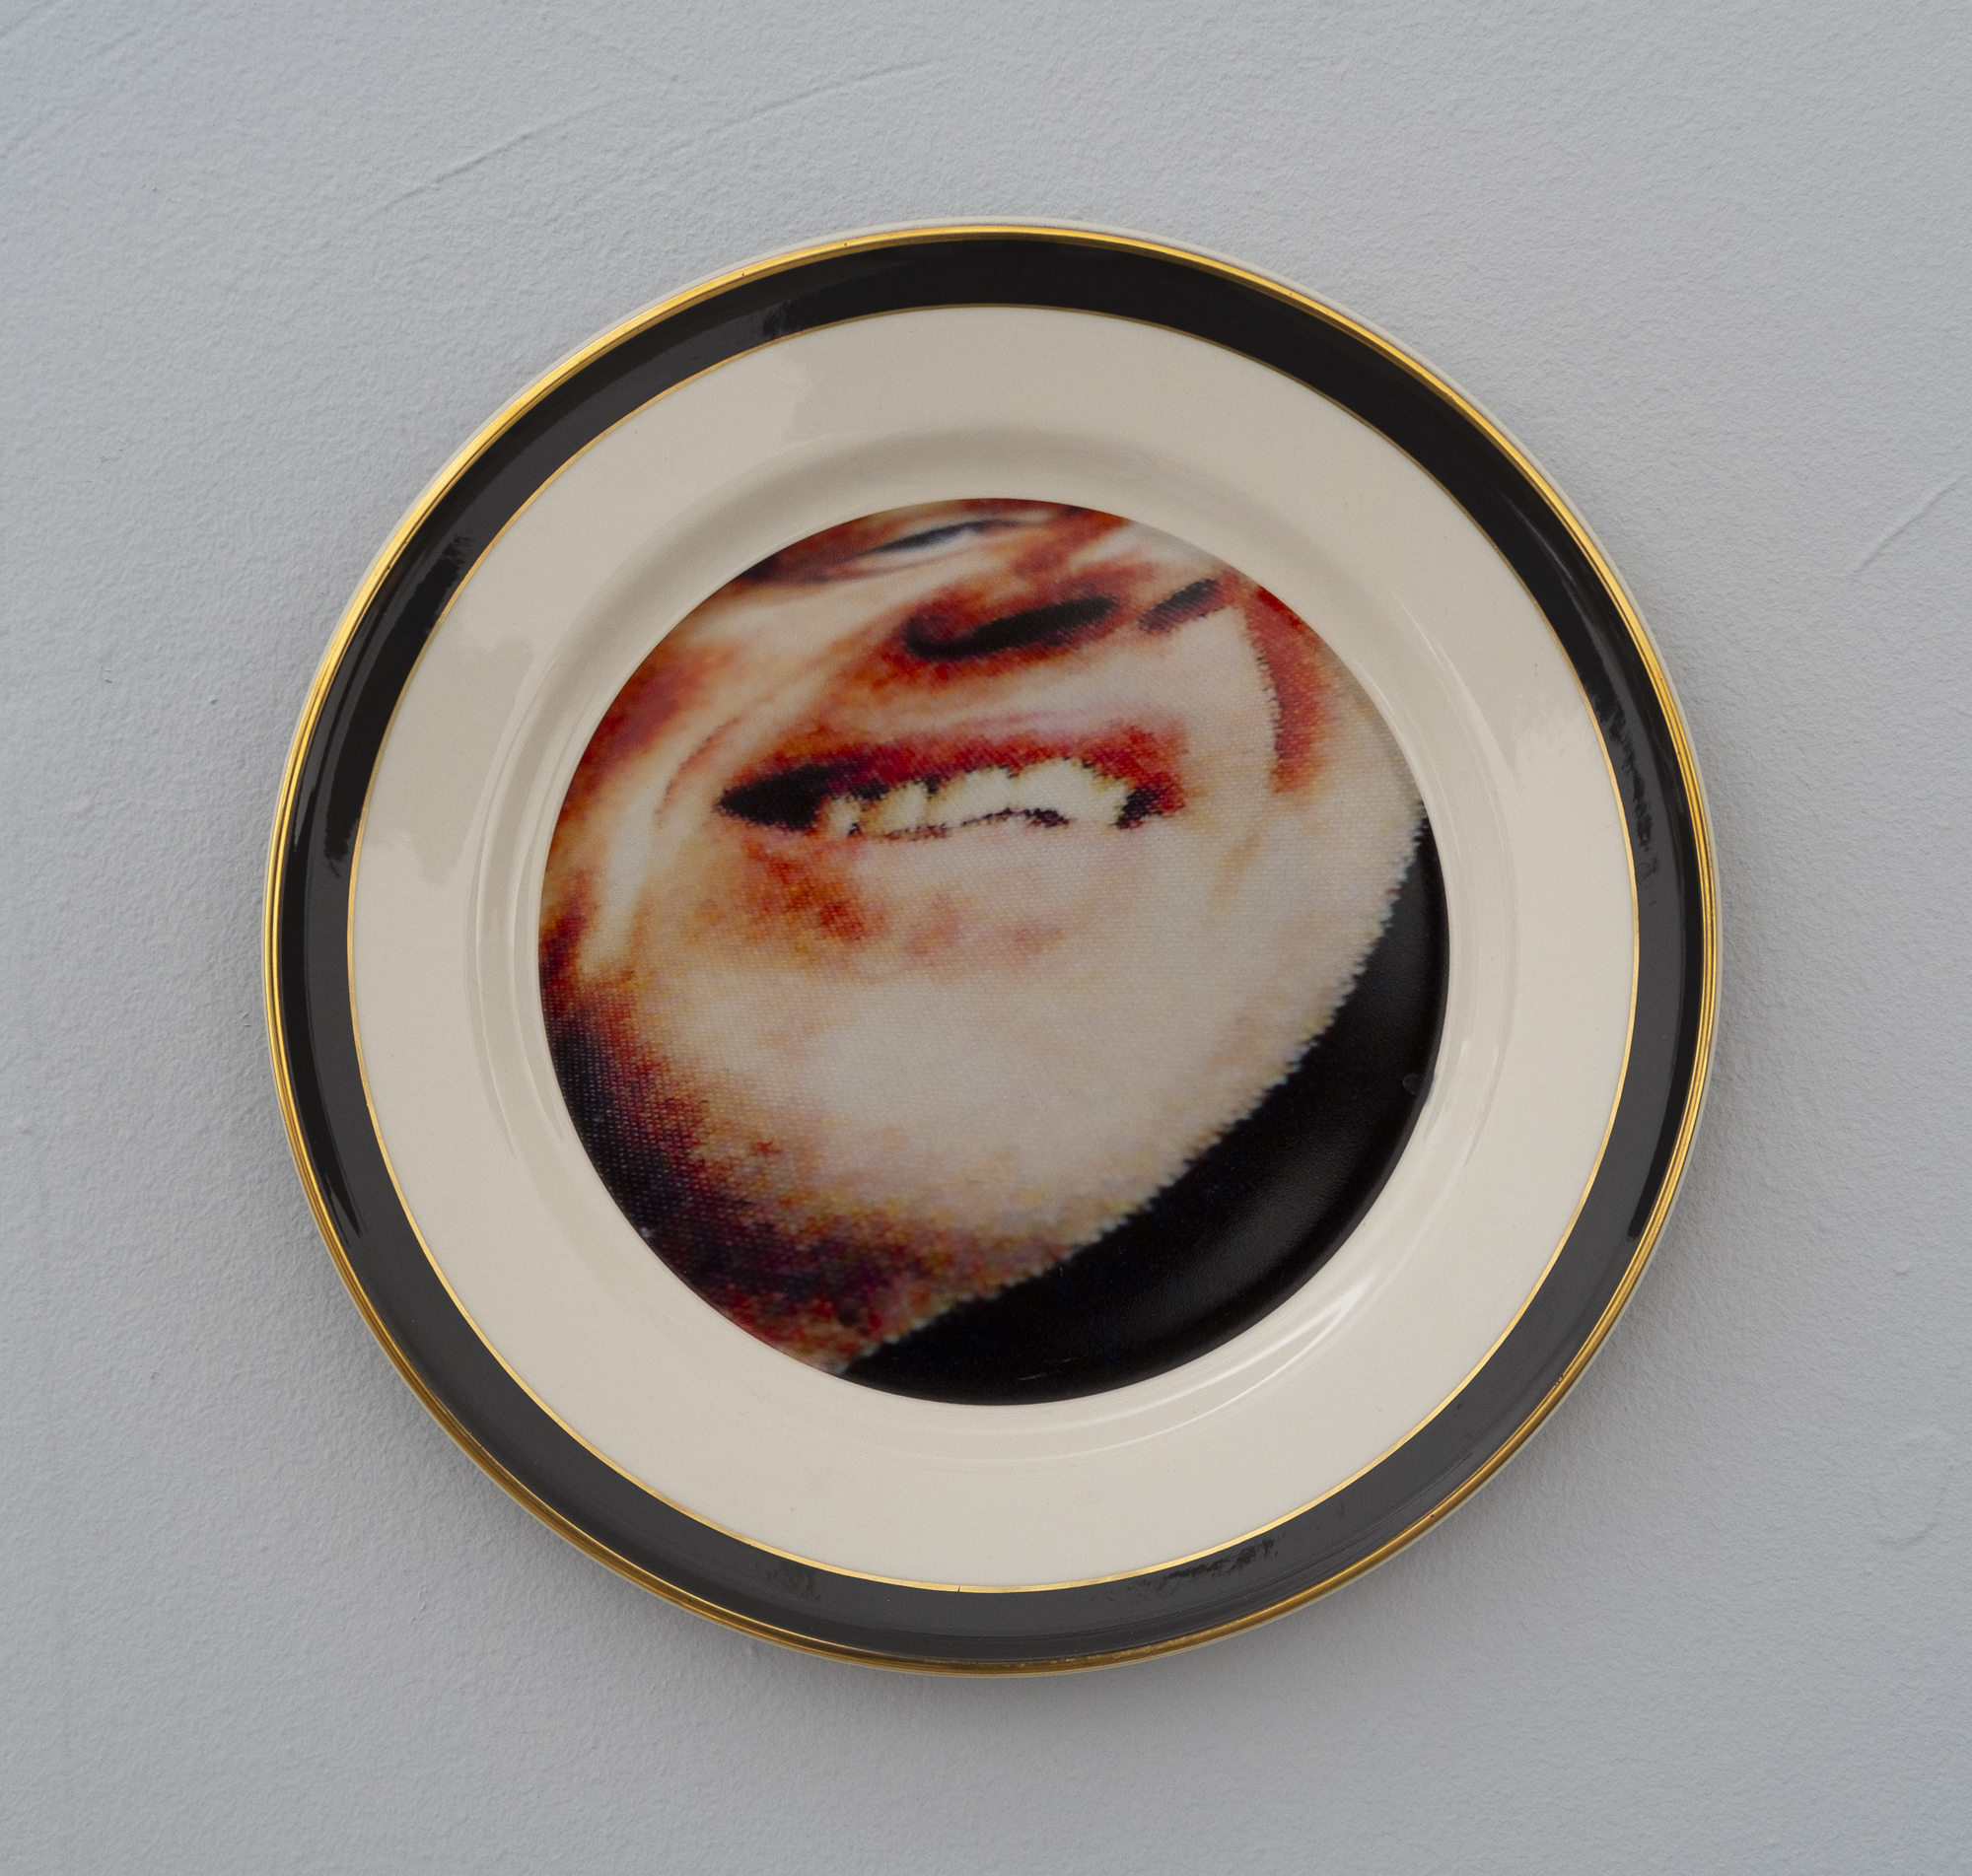  Bean Gilsdorf,  Jimmy Carter,  2018, Ceramic plate, 10 inch diameter 